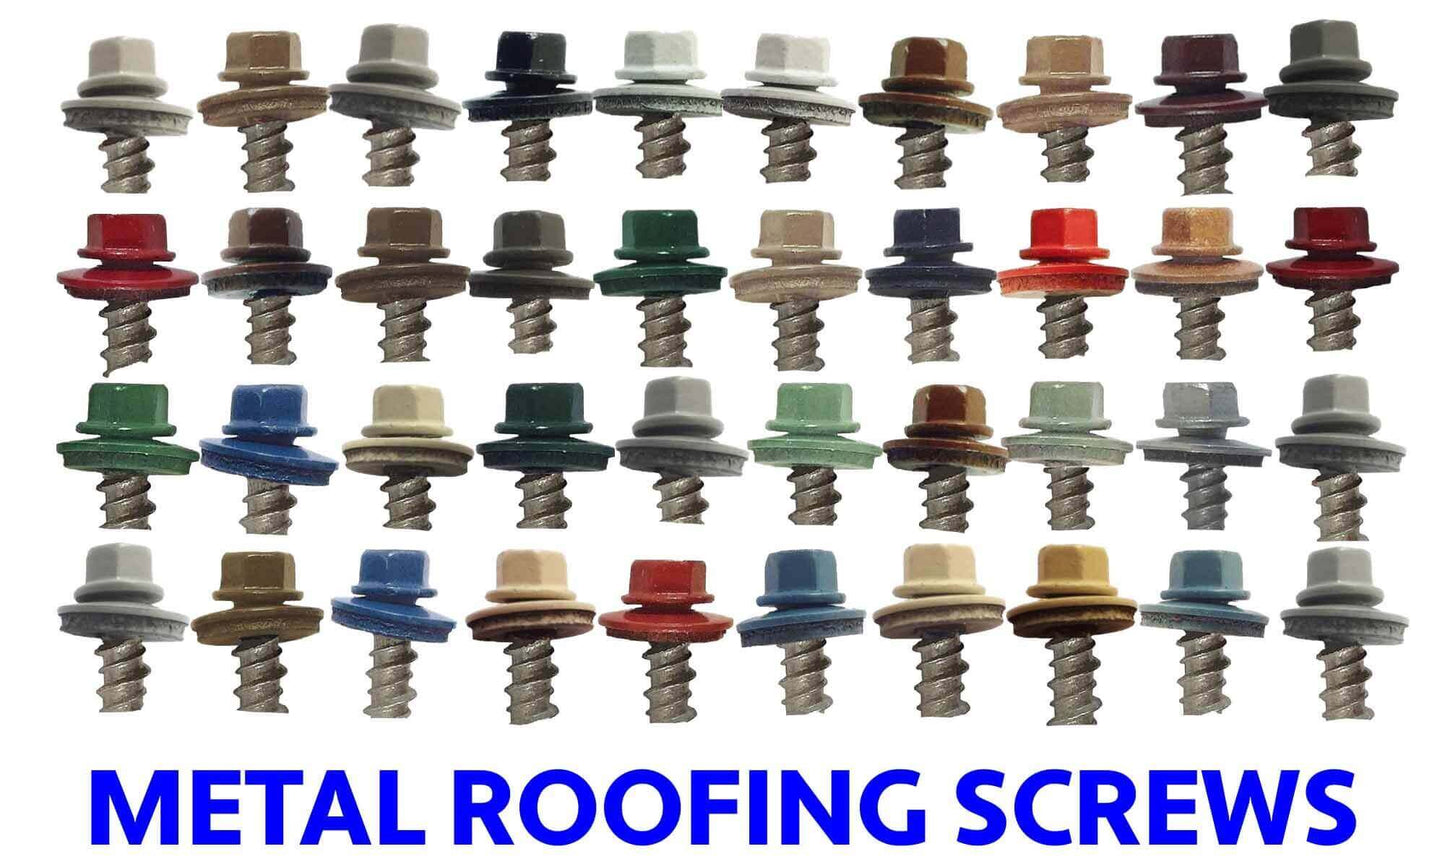 #10 x 2-1/2"   Metal ROOFING SCREWS: (250) Galvanized Hex Head Sheet Metal Roof Screw. Self starting metal to wood siding screws. EPDM washer